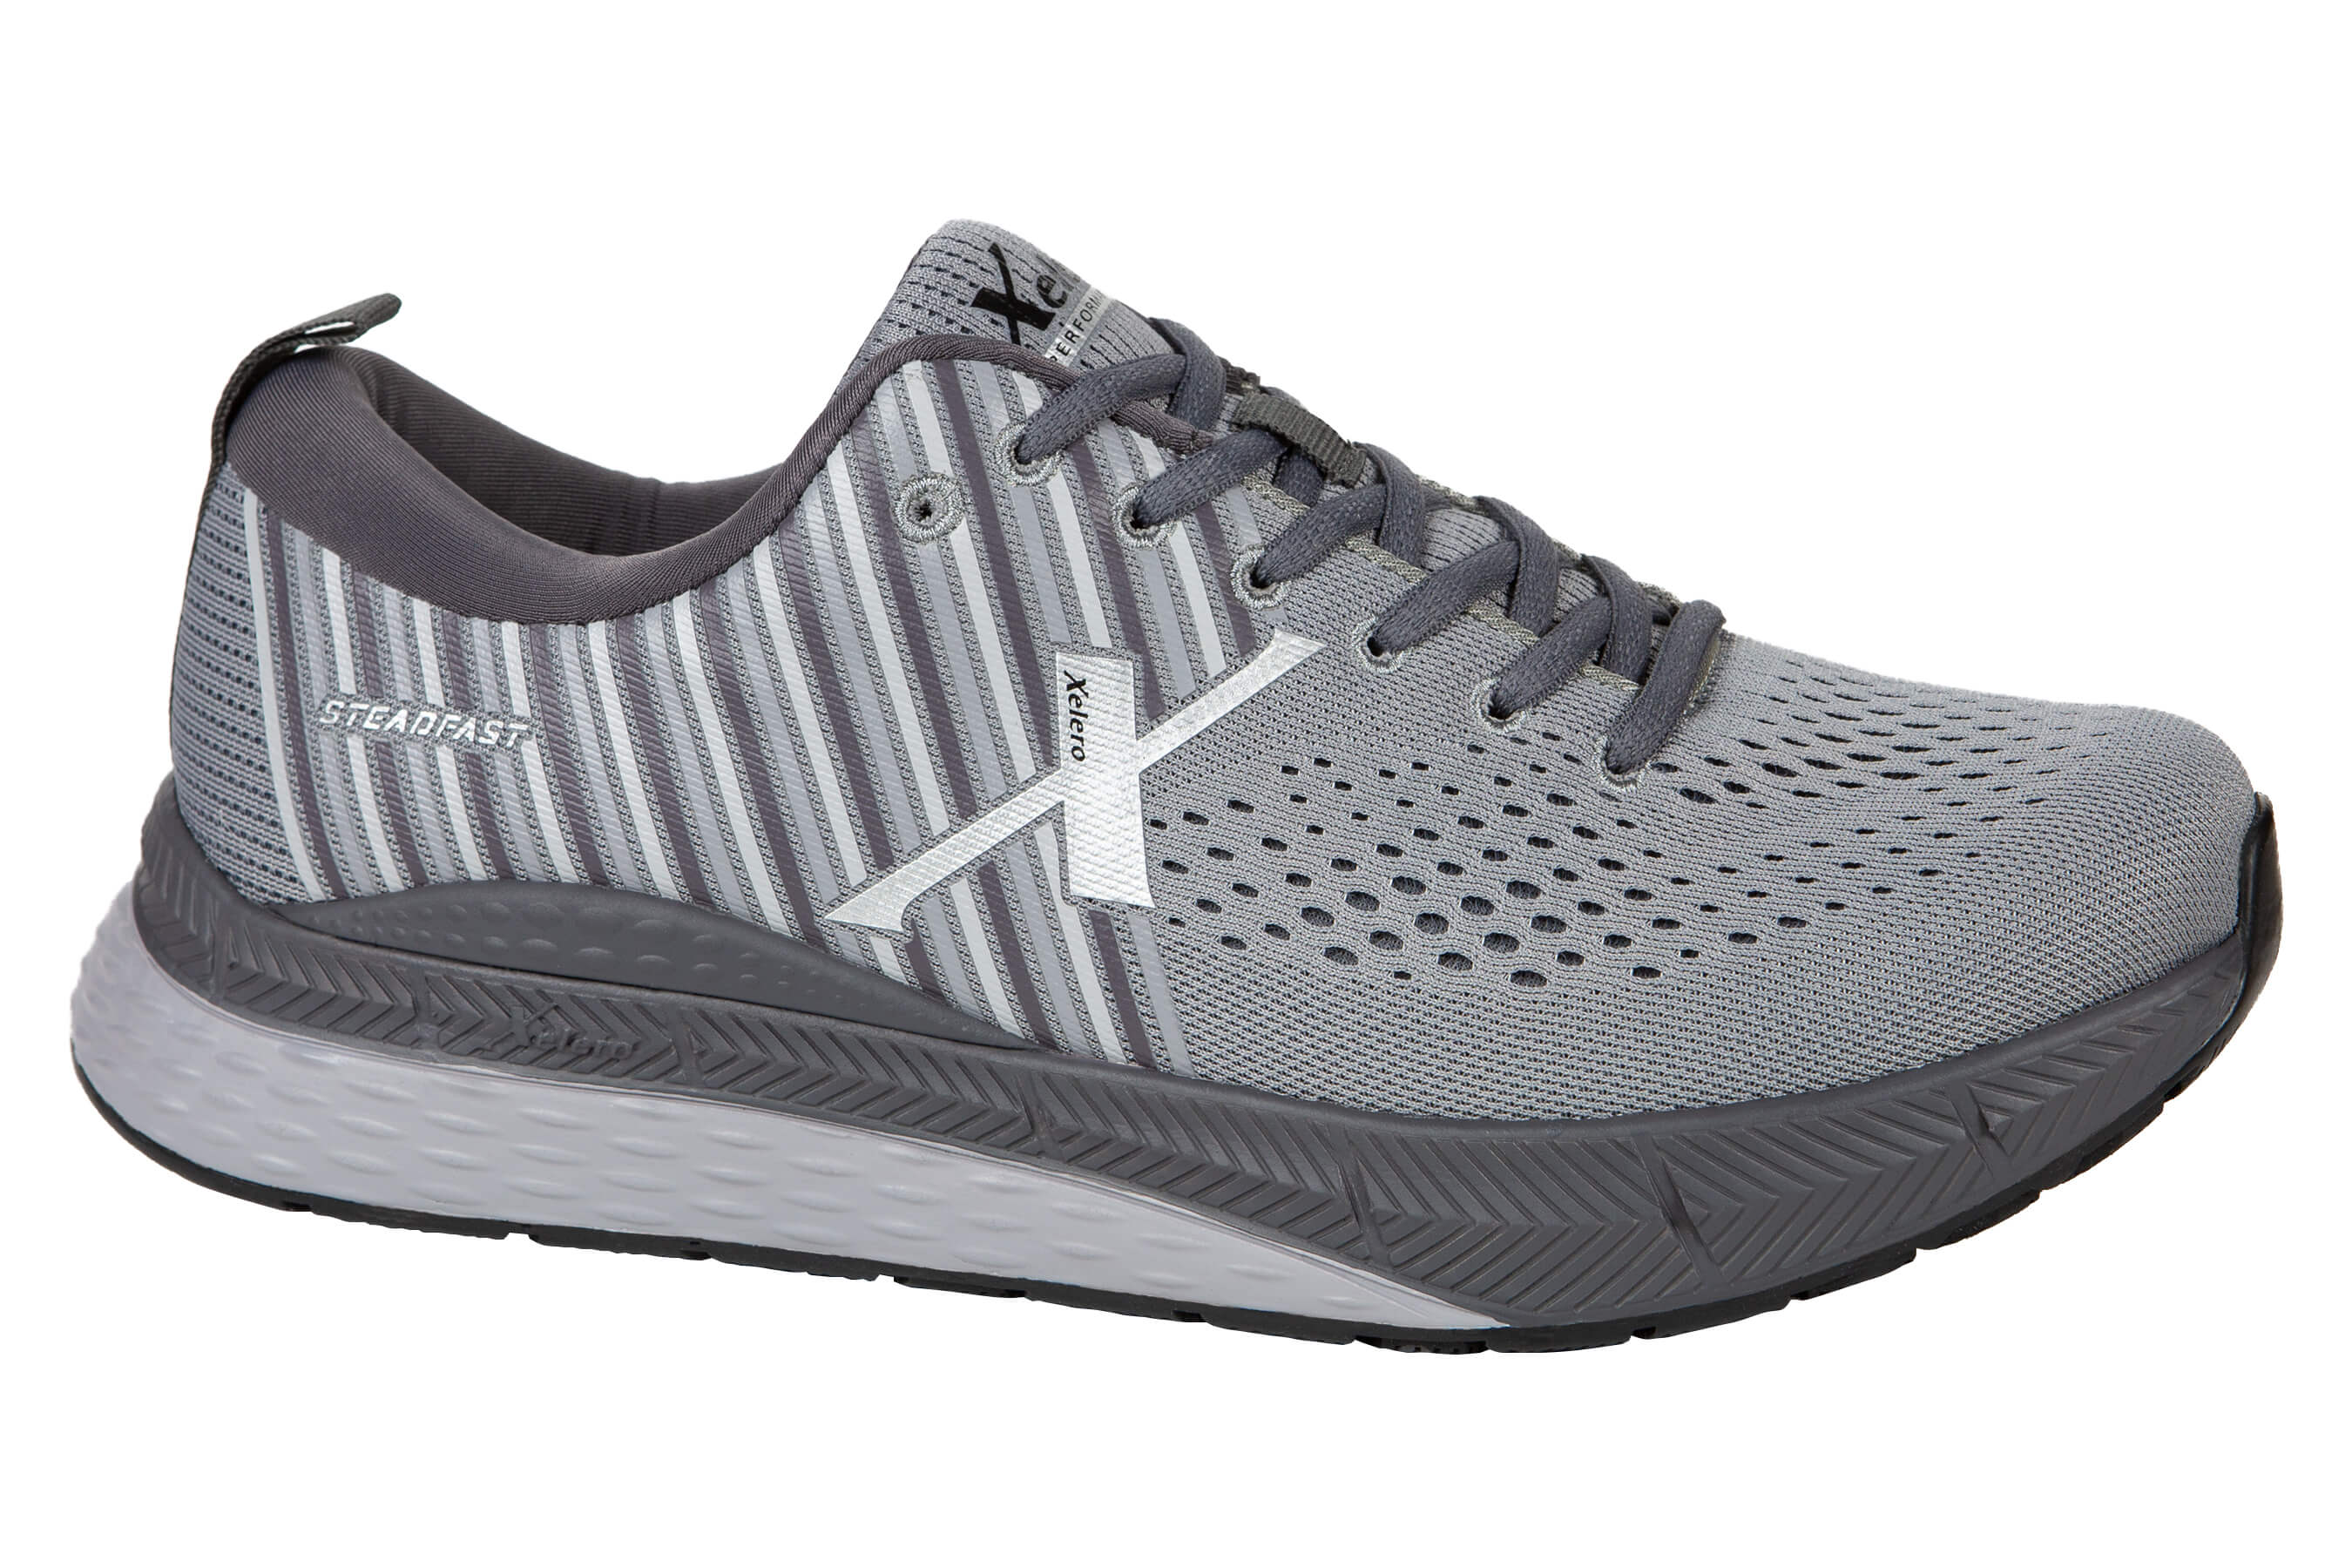 Xelero Shoes Steadfast X52834 - Men's Athletic Comfort Athletic Shoe - Extra Depth For Orthotics